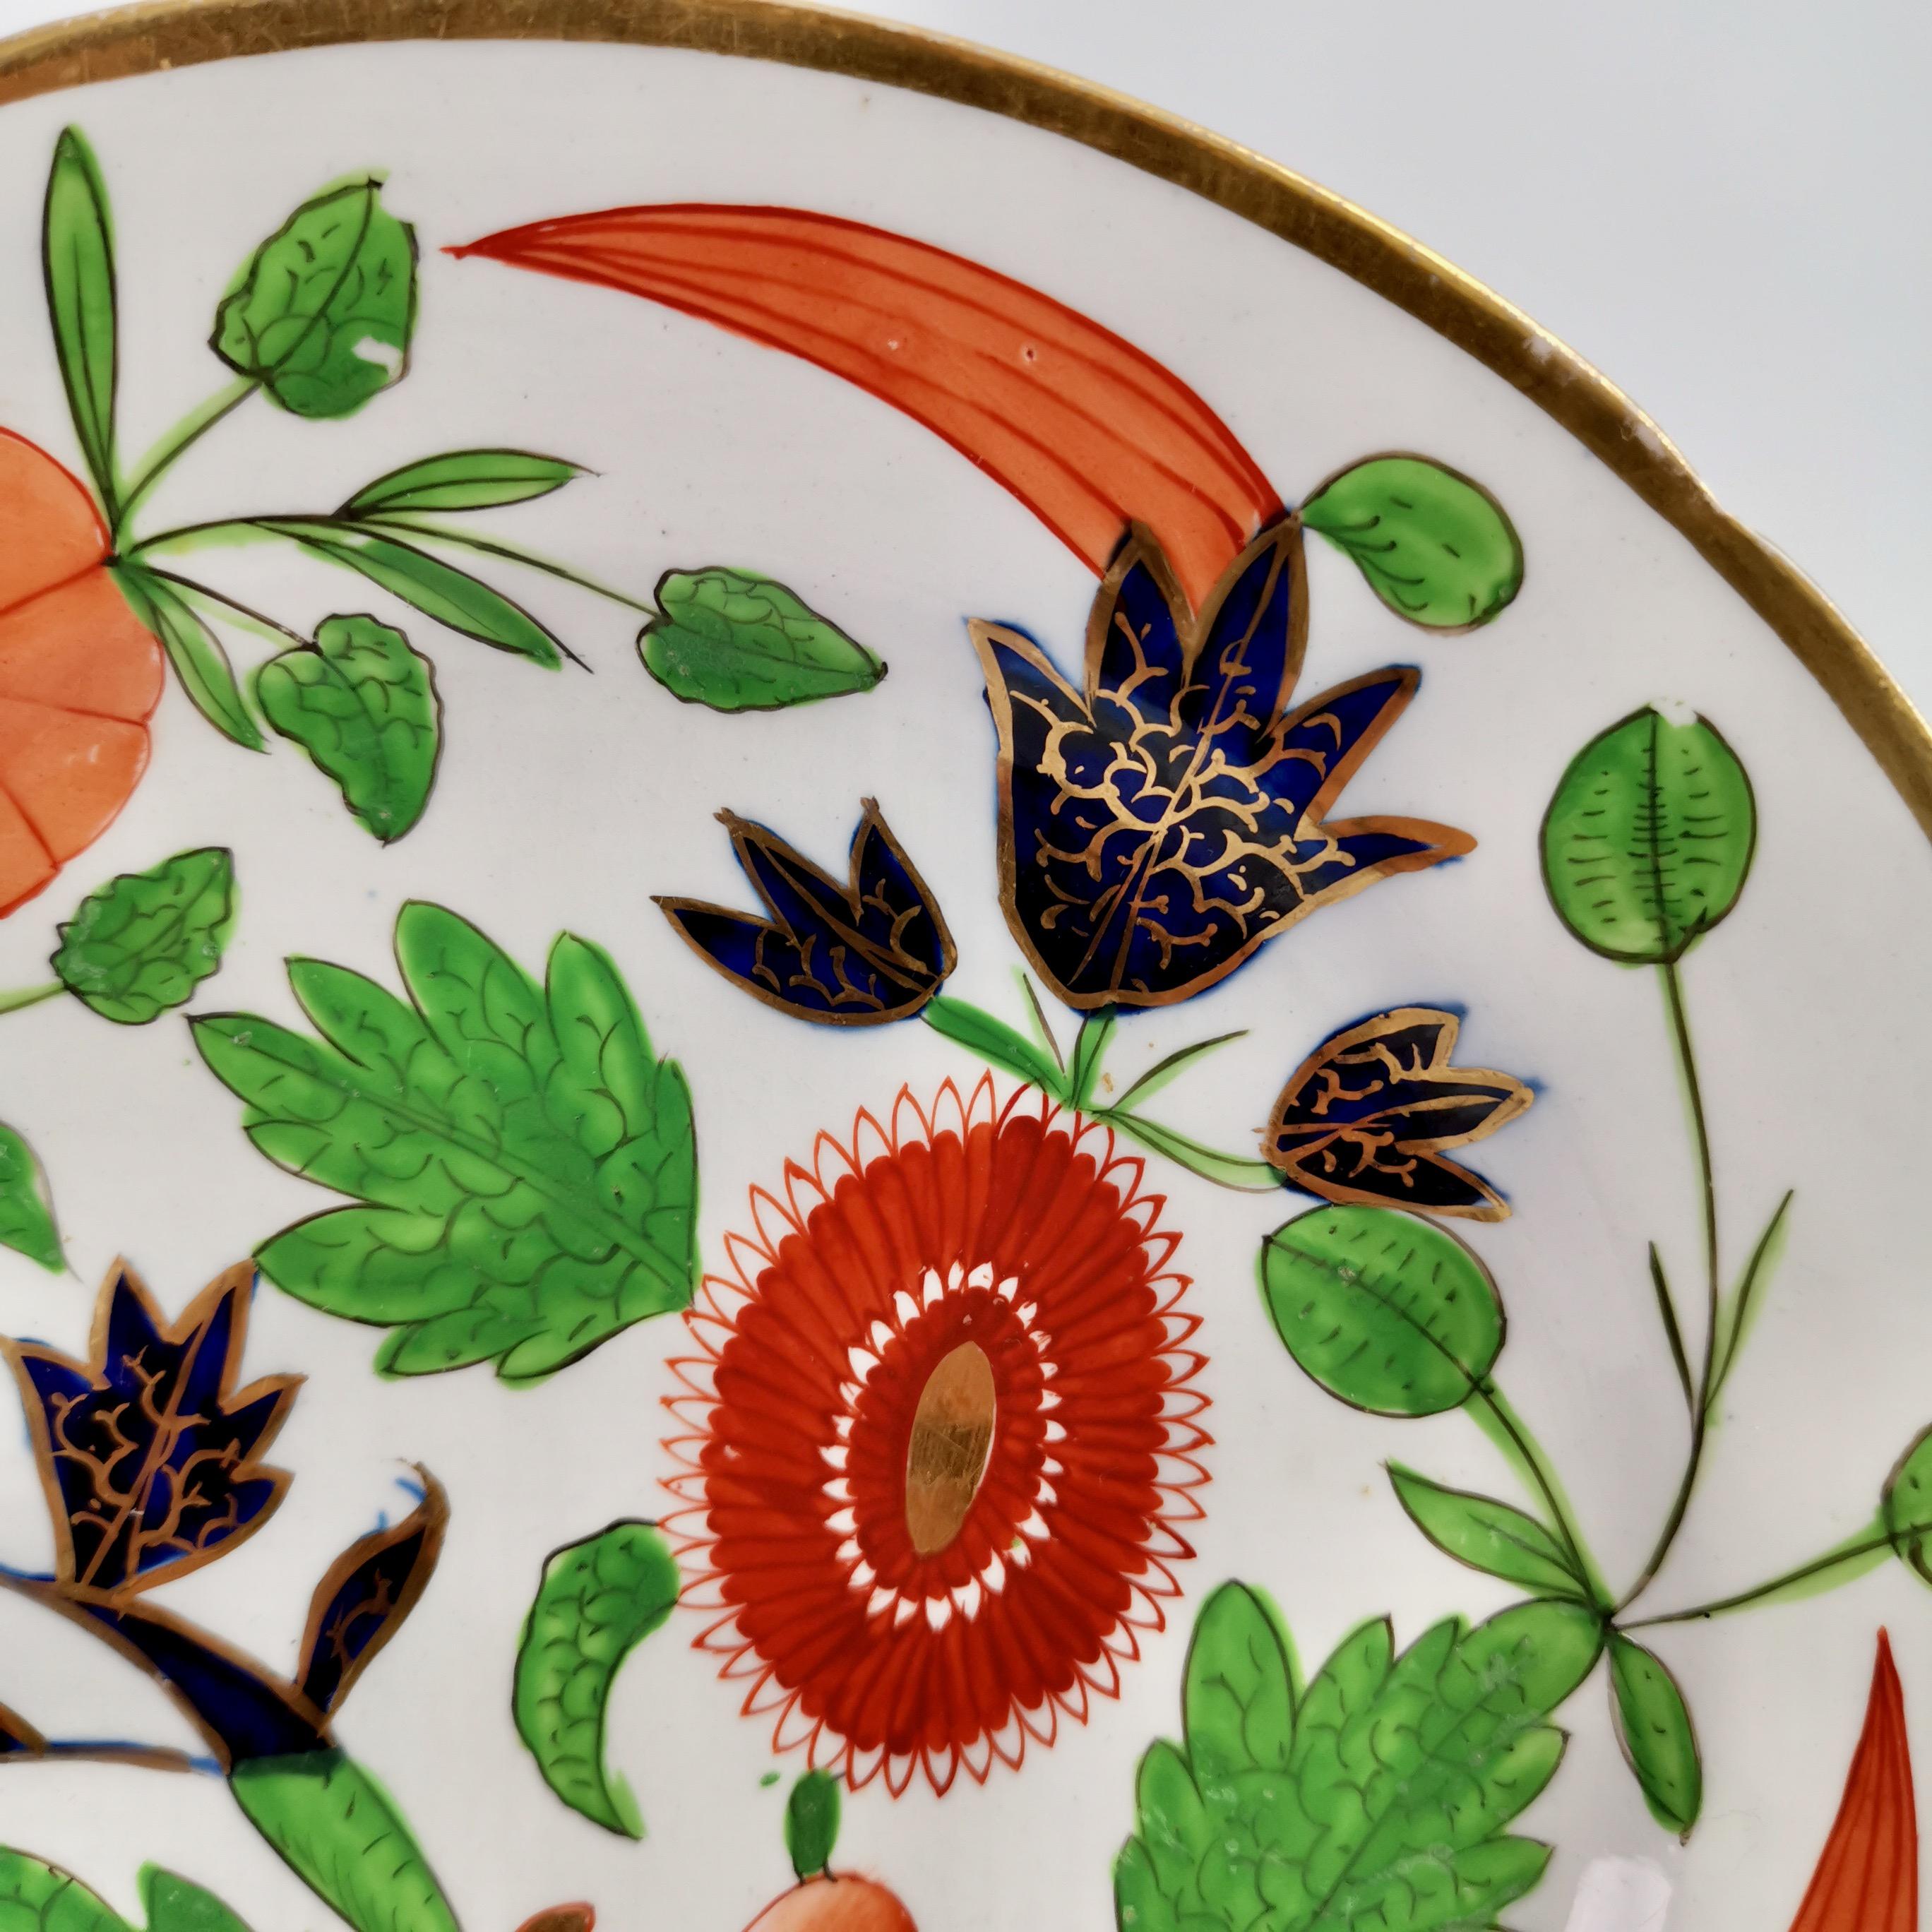 John Rose Coalport Porcelain Dessert Service, Japan Imari Pattern, circa 1805 1